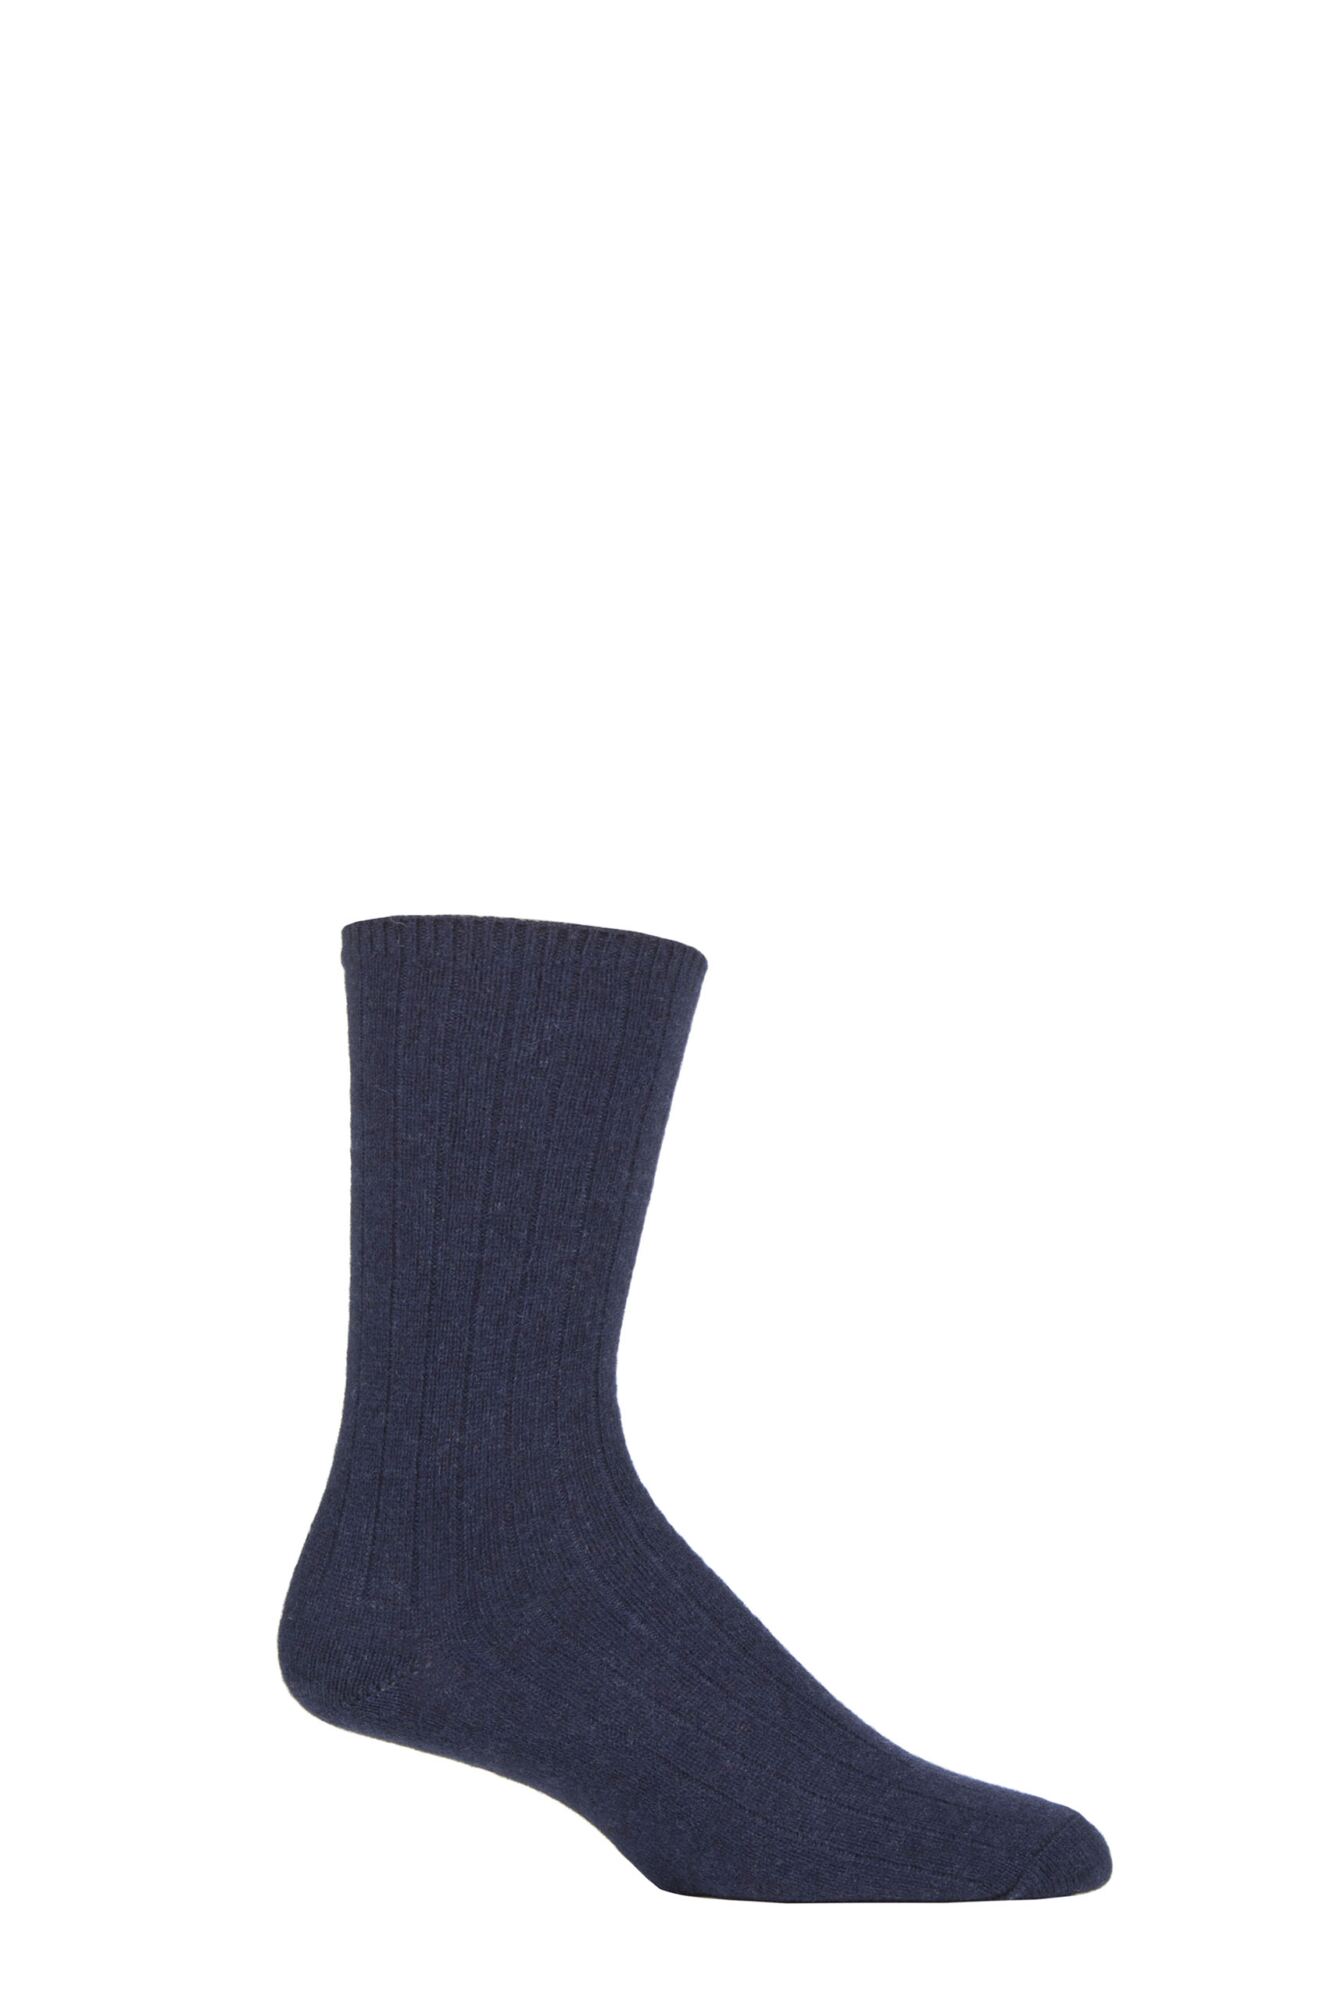 1 Pair of London 100% Cashmere Bed Socks Men's - SOCKSHOP of London